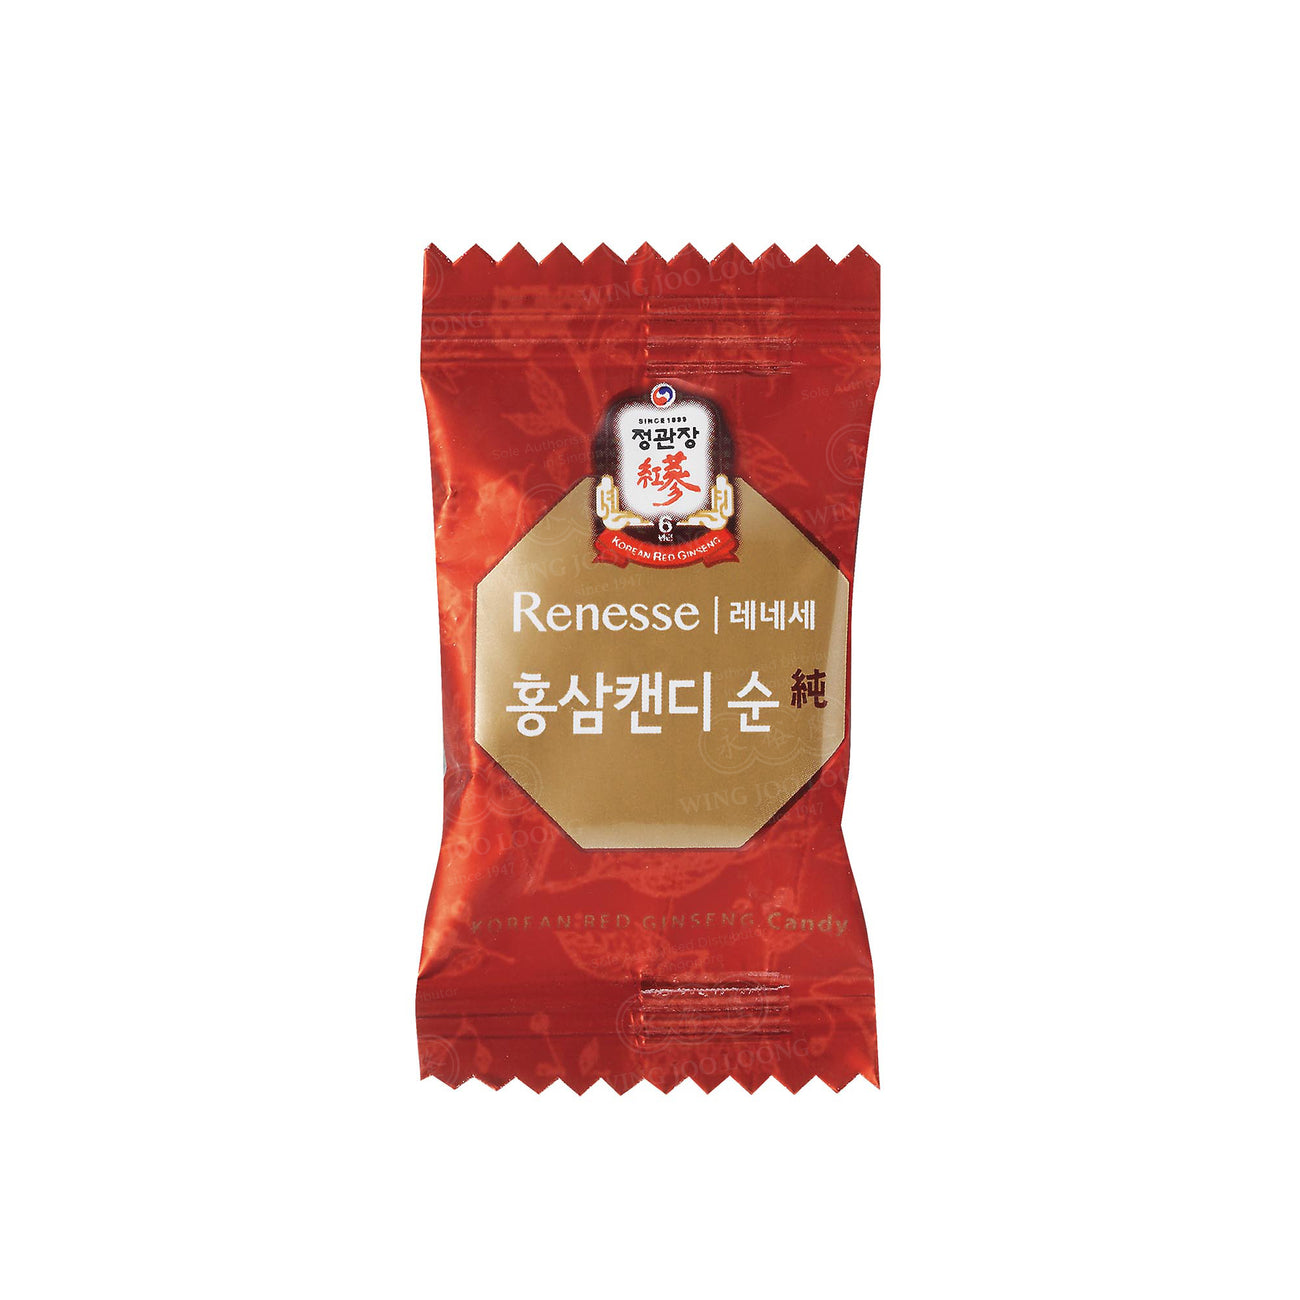 Cheong Kwan Jang Renesse Korean Red Ginseng Candy S (No Added Sugar) 高丽参糖 (无糖)